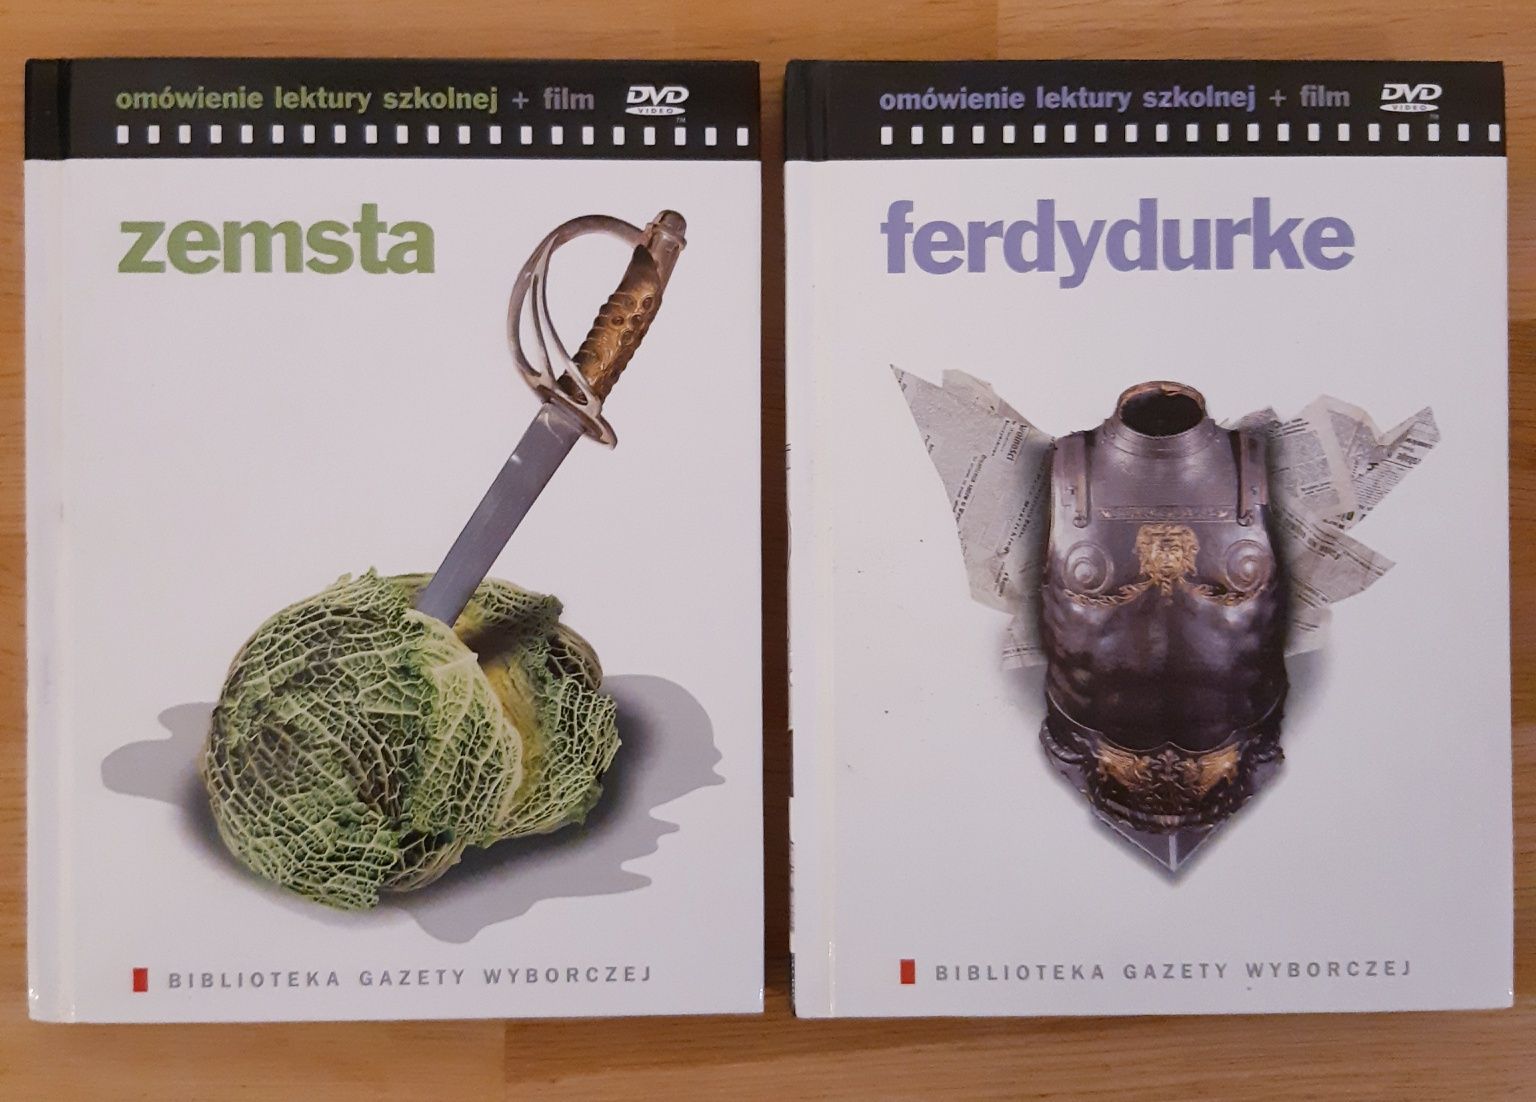 Filmy DVD - "Zemsta" oraz "Ferdydurke"